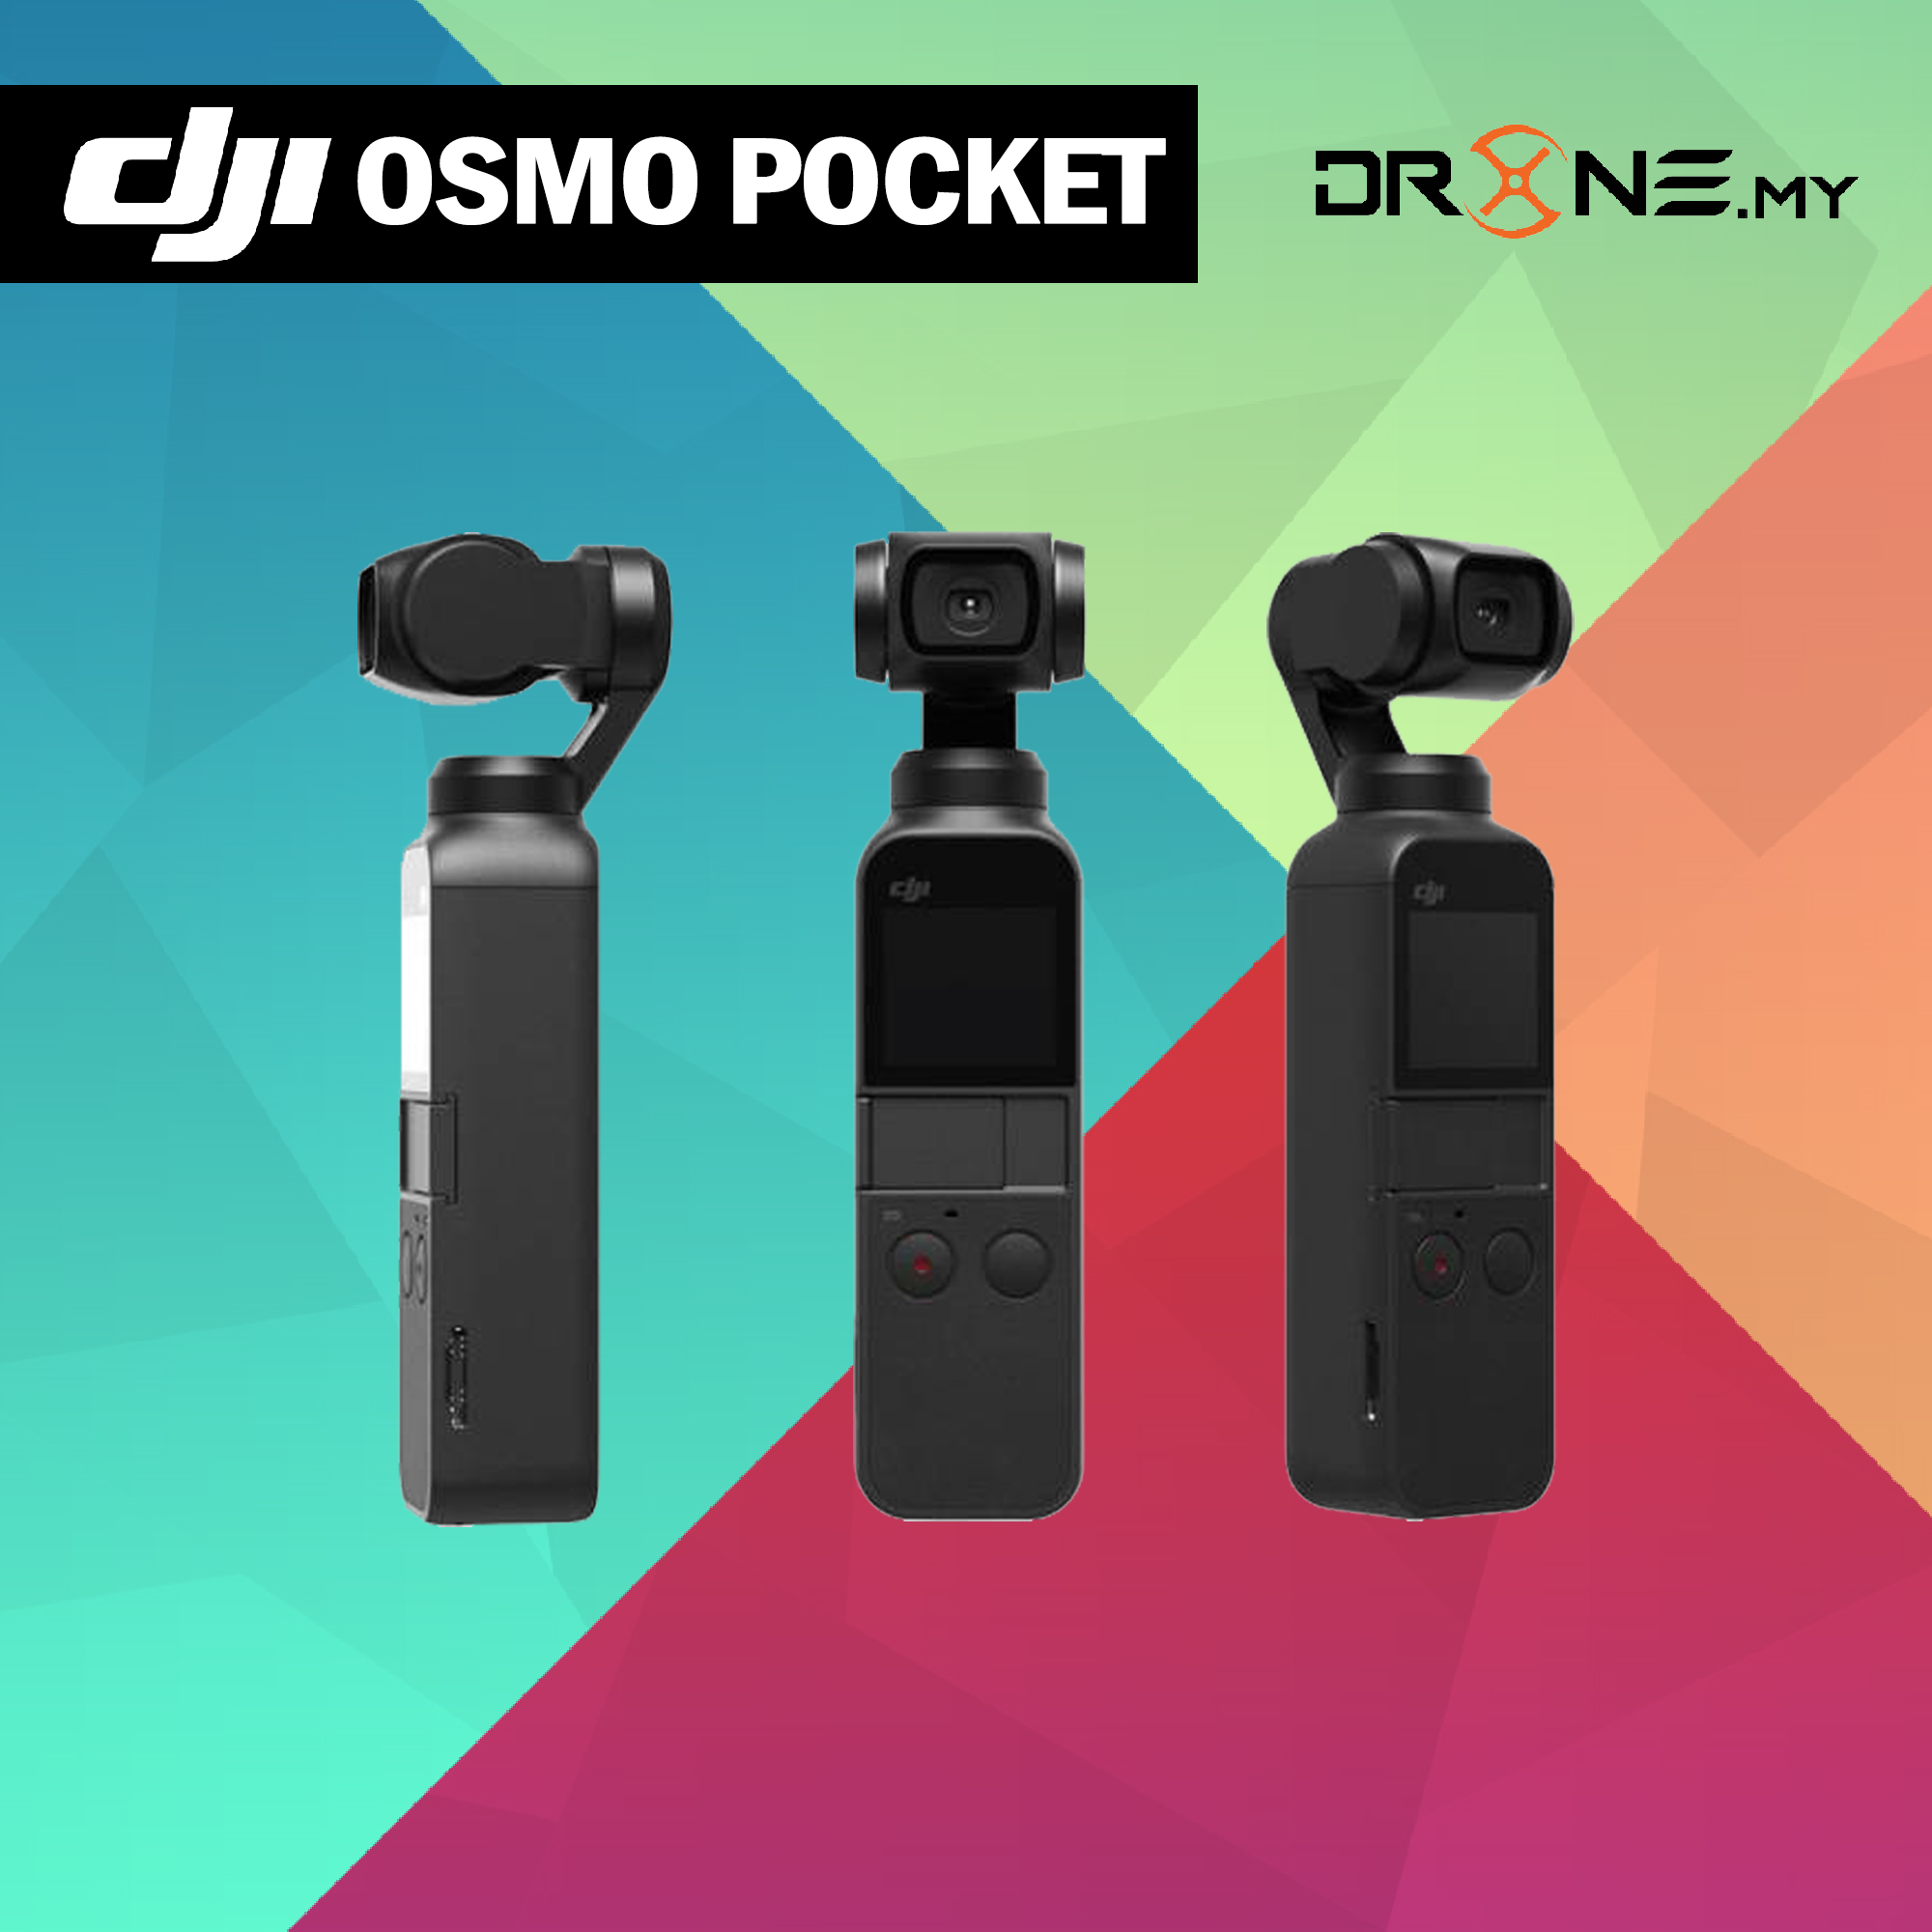 Osmo Pocket | DRONE.MY